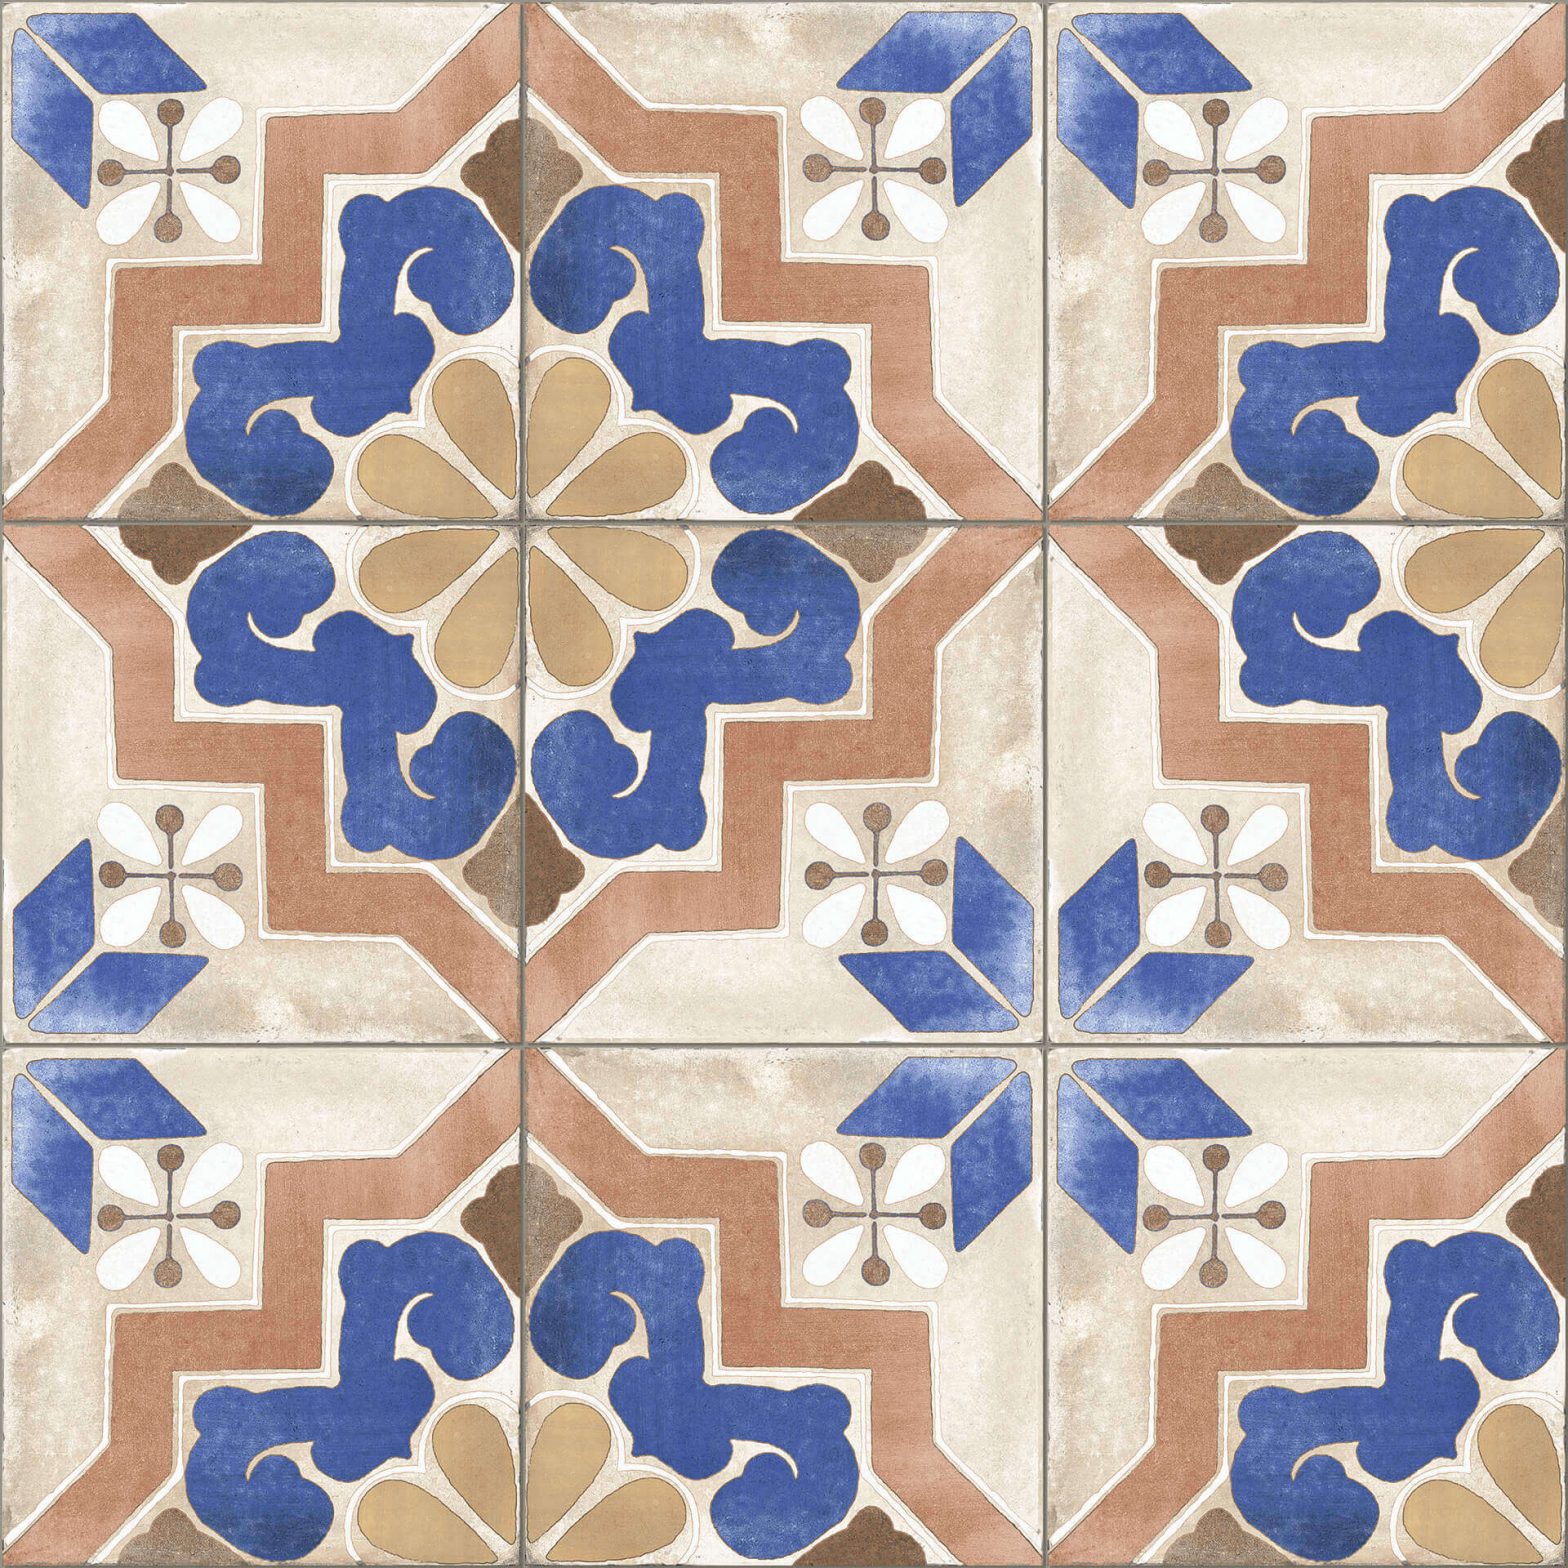 Decorative Spanish & Moroccan Tiles | Cerastone Surfaces tile + stone ...